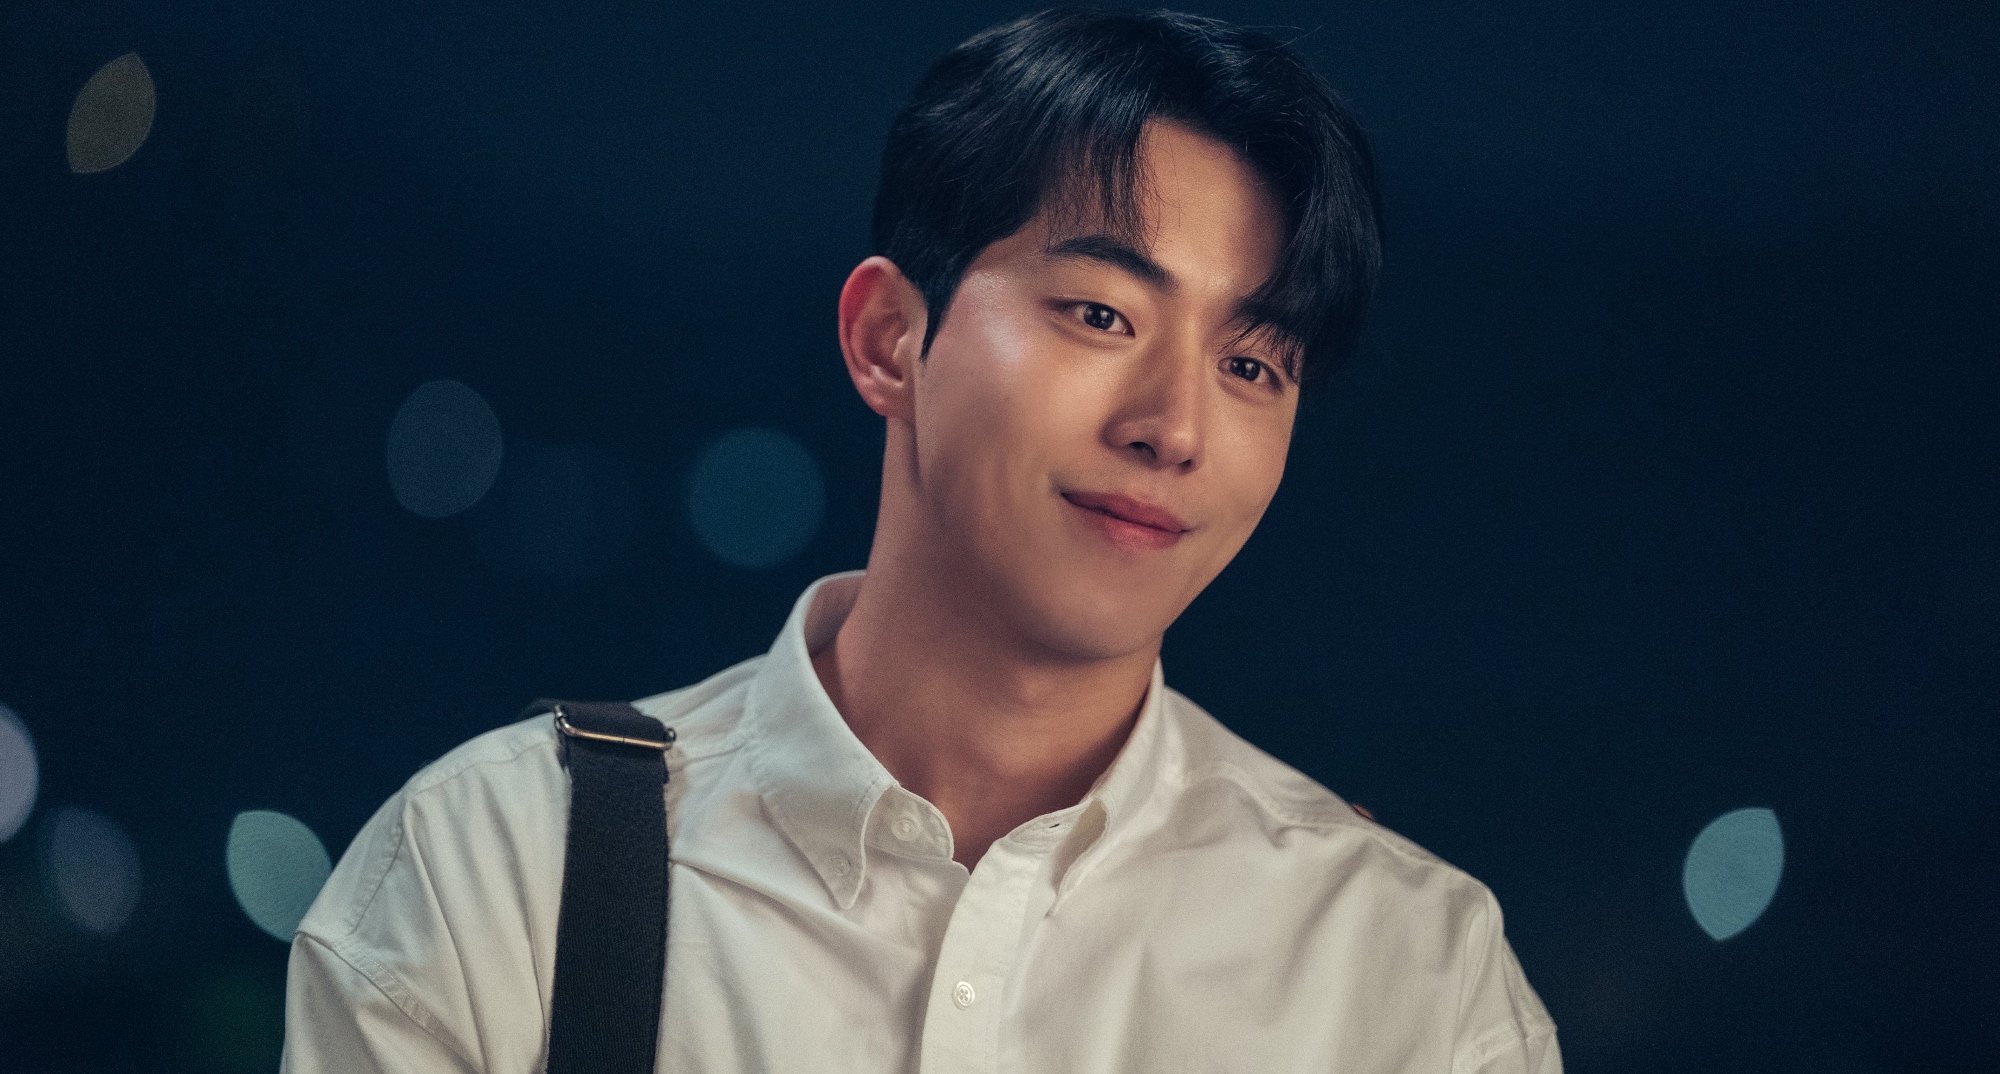 Baek Yi-jin in 'Twenty-Five Twenty-One' K-drama wearing white button-up shirt.